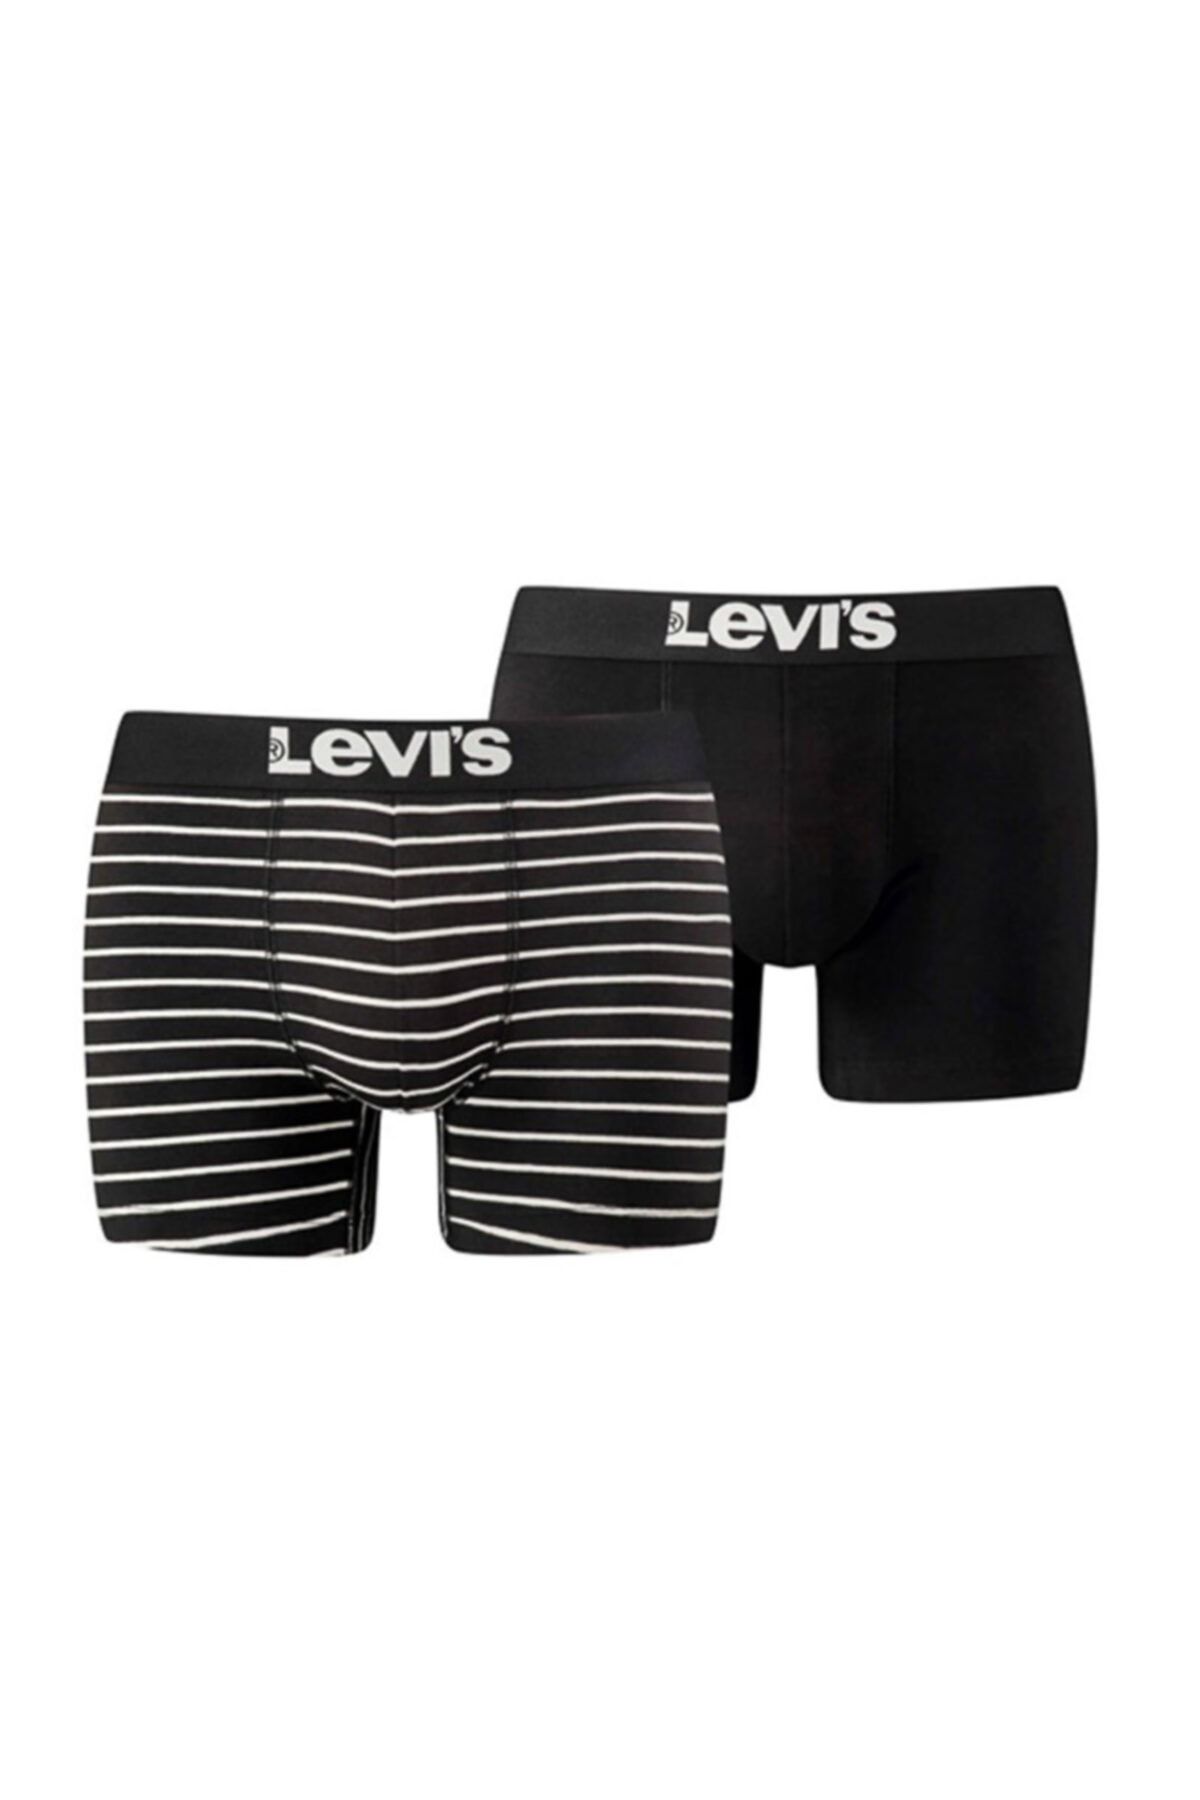 Levi's ® Basic Boxer Brief - 2 Pack